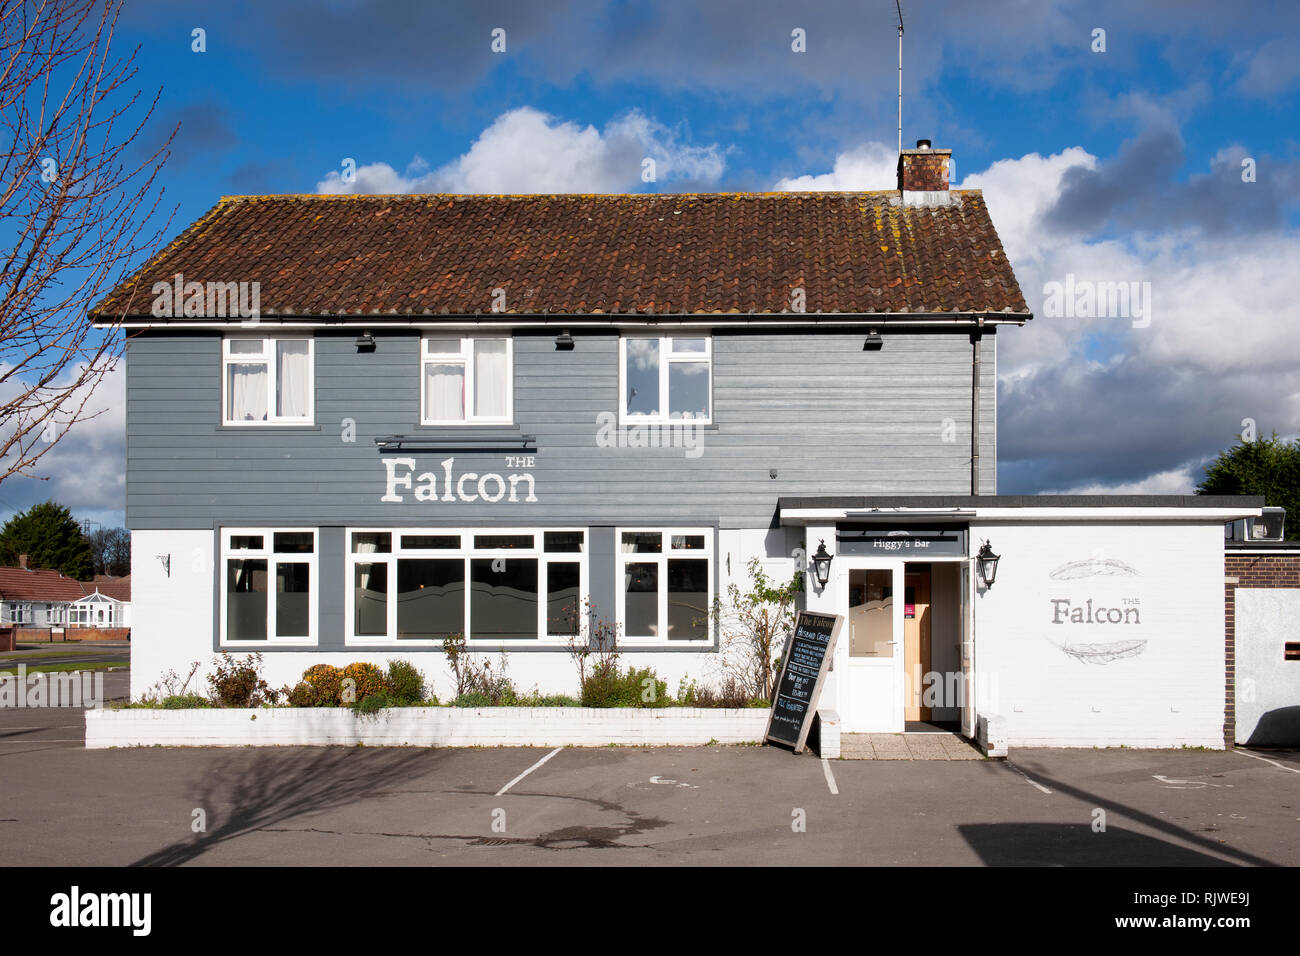 The Falcon public house, Hambledon Road, Waterlooville, Hampshire, England, UK Stock Photo